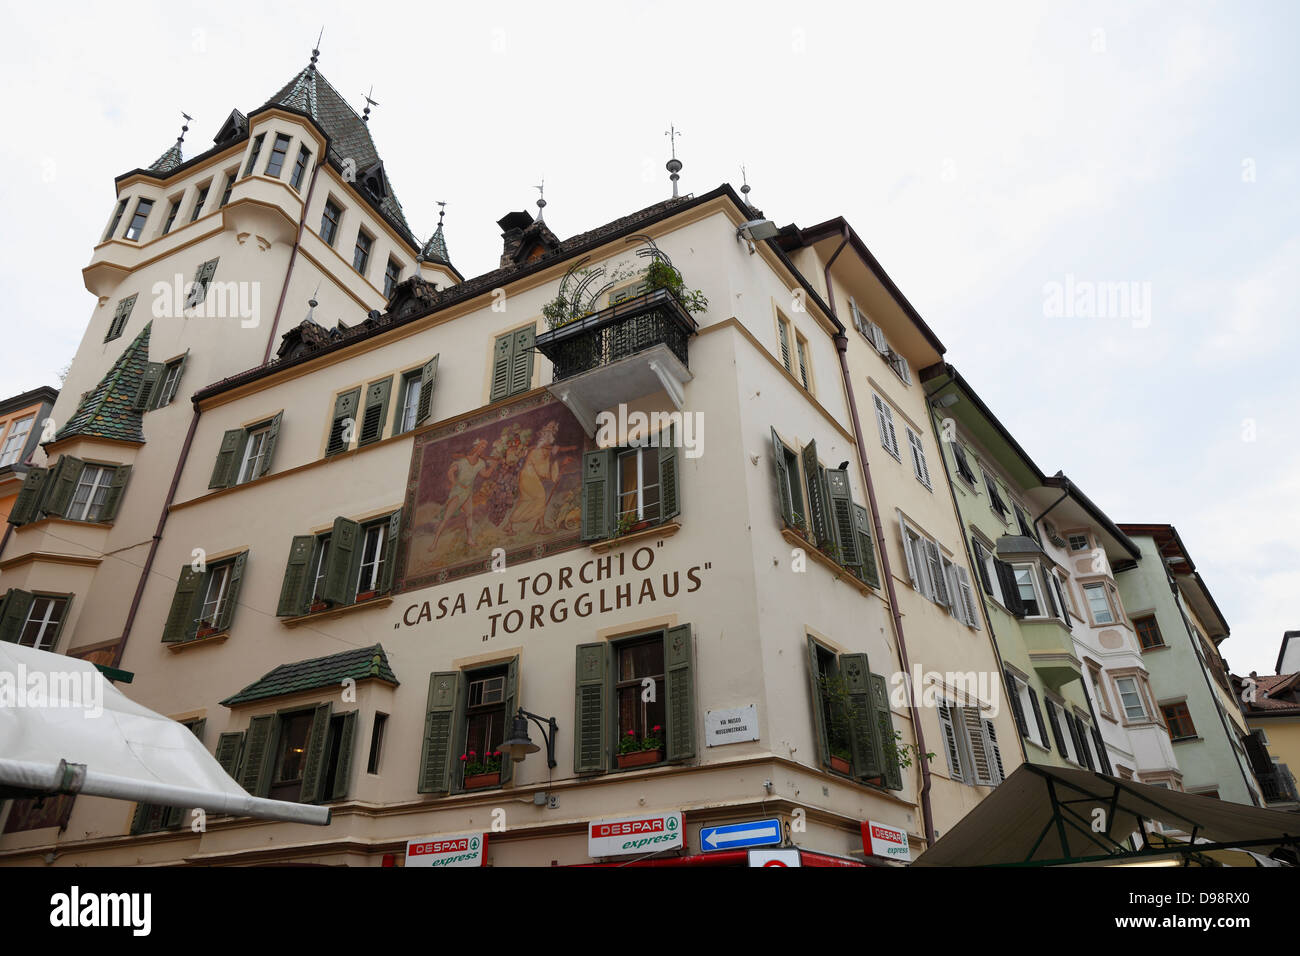 Center and historic buildings of Bolzano,'Casa al torchio'Torgglhaus Stock Photo